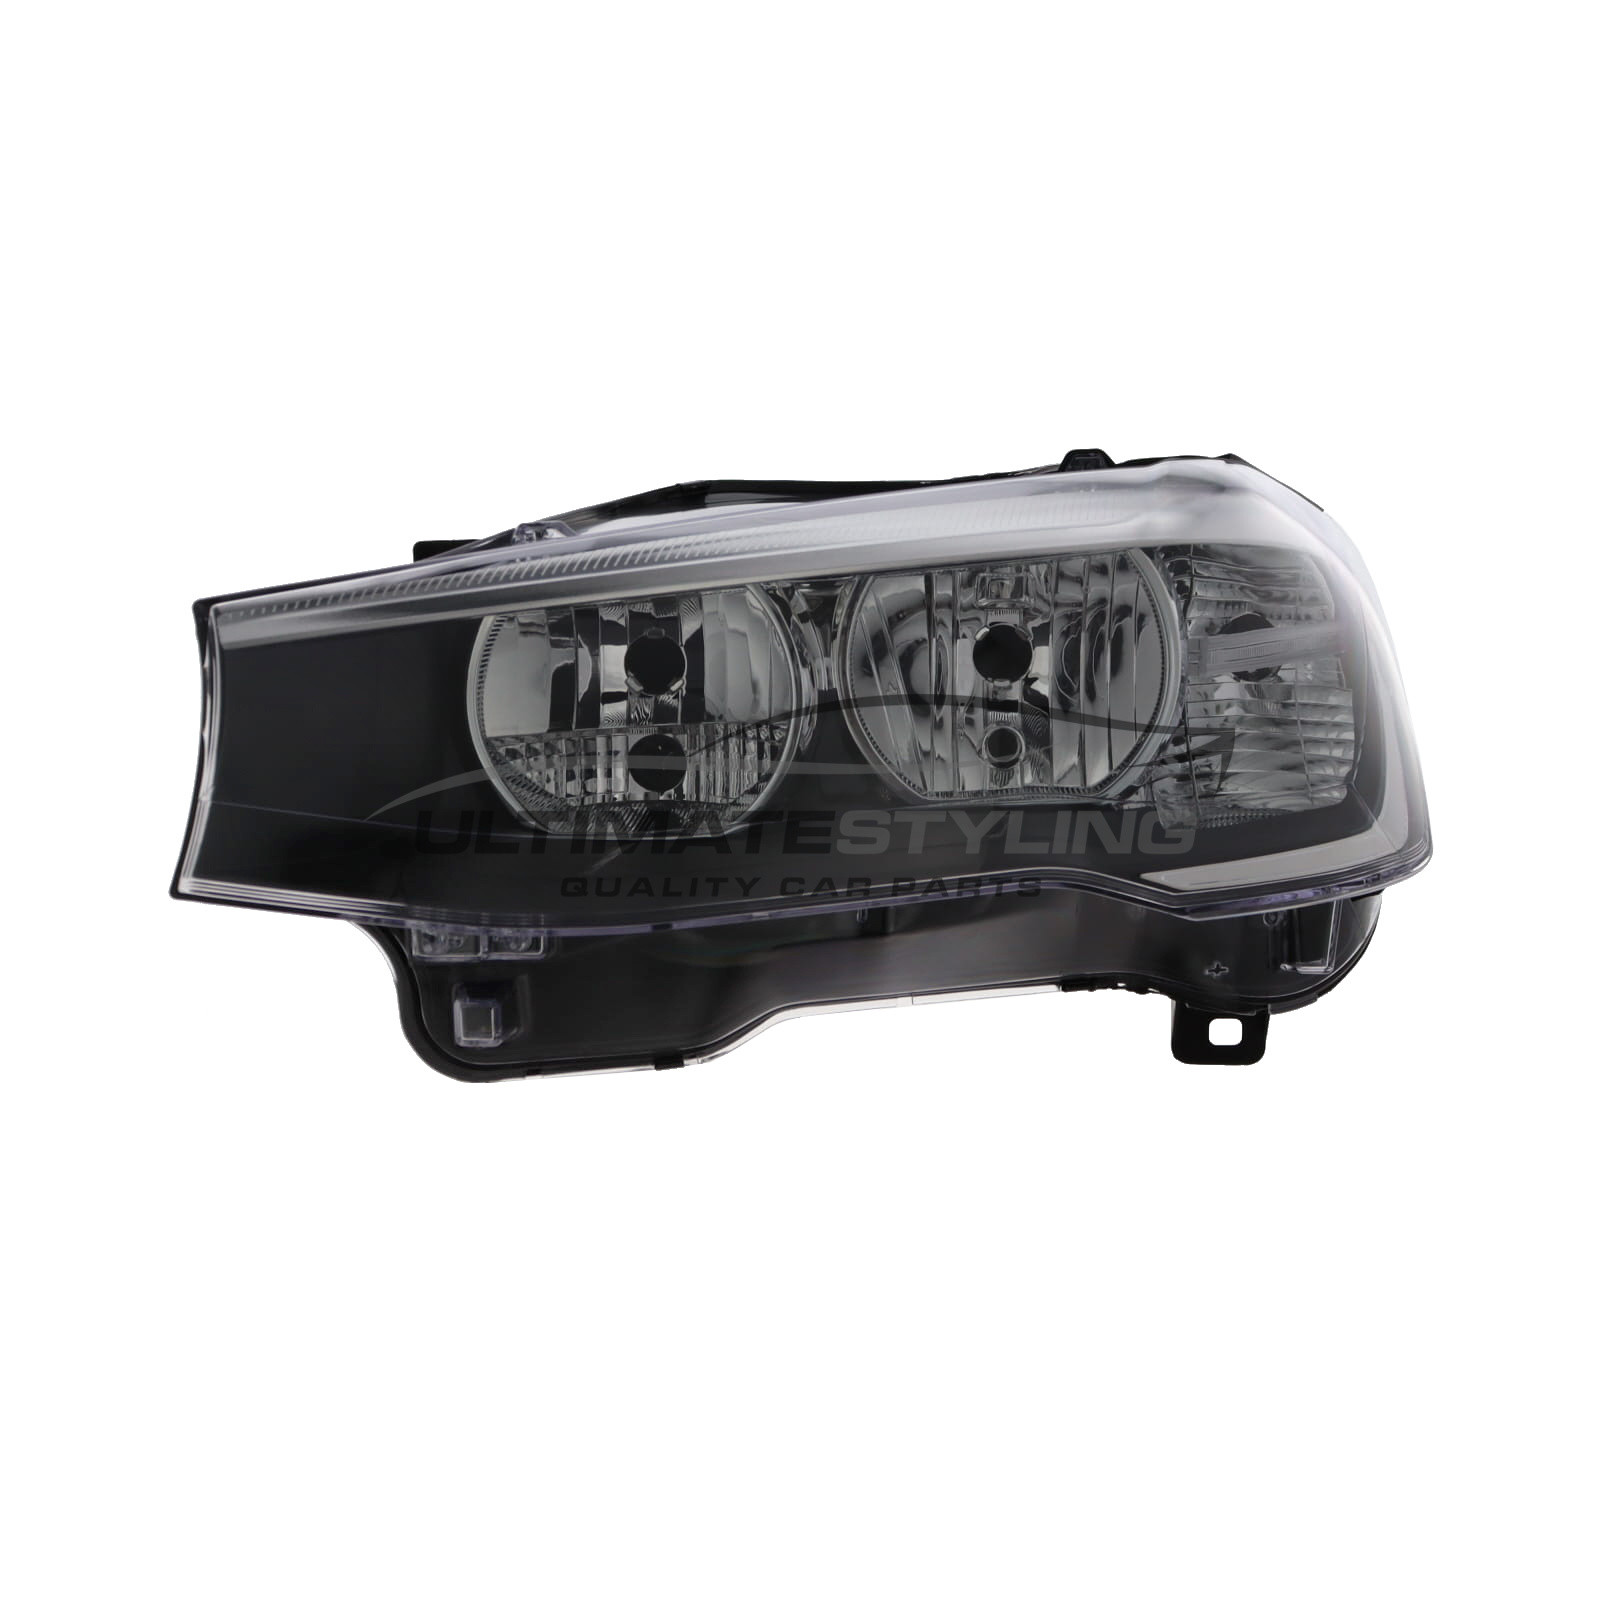 BMW X3 / X4 Headlight / Headlamp - Passenger Side (LH) - Halogen